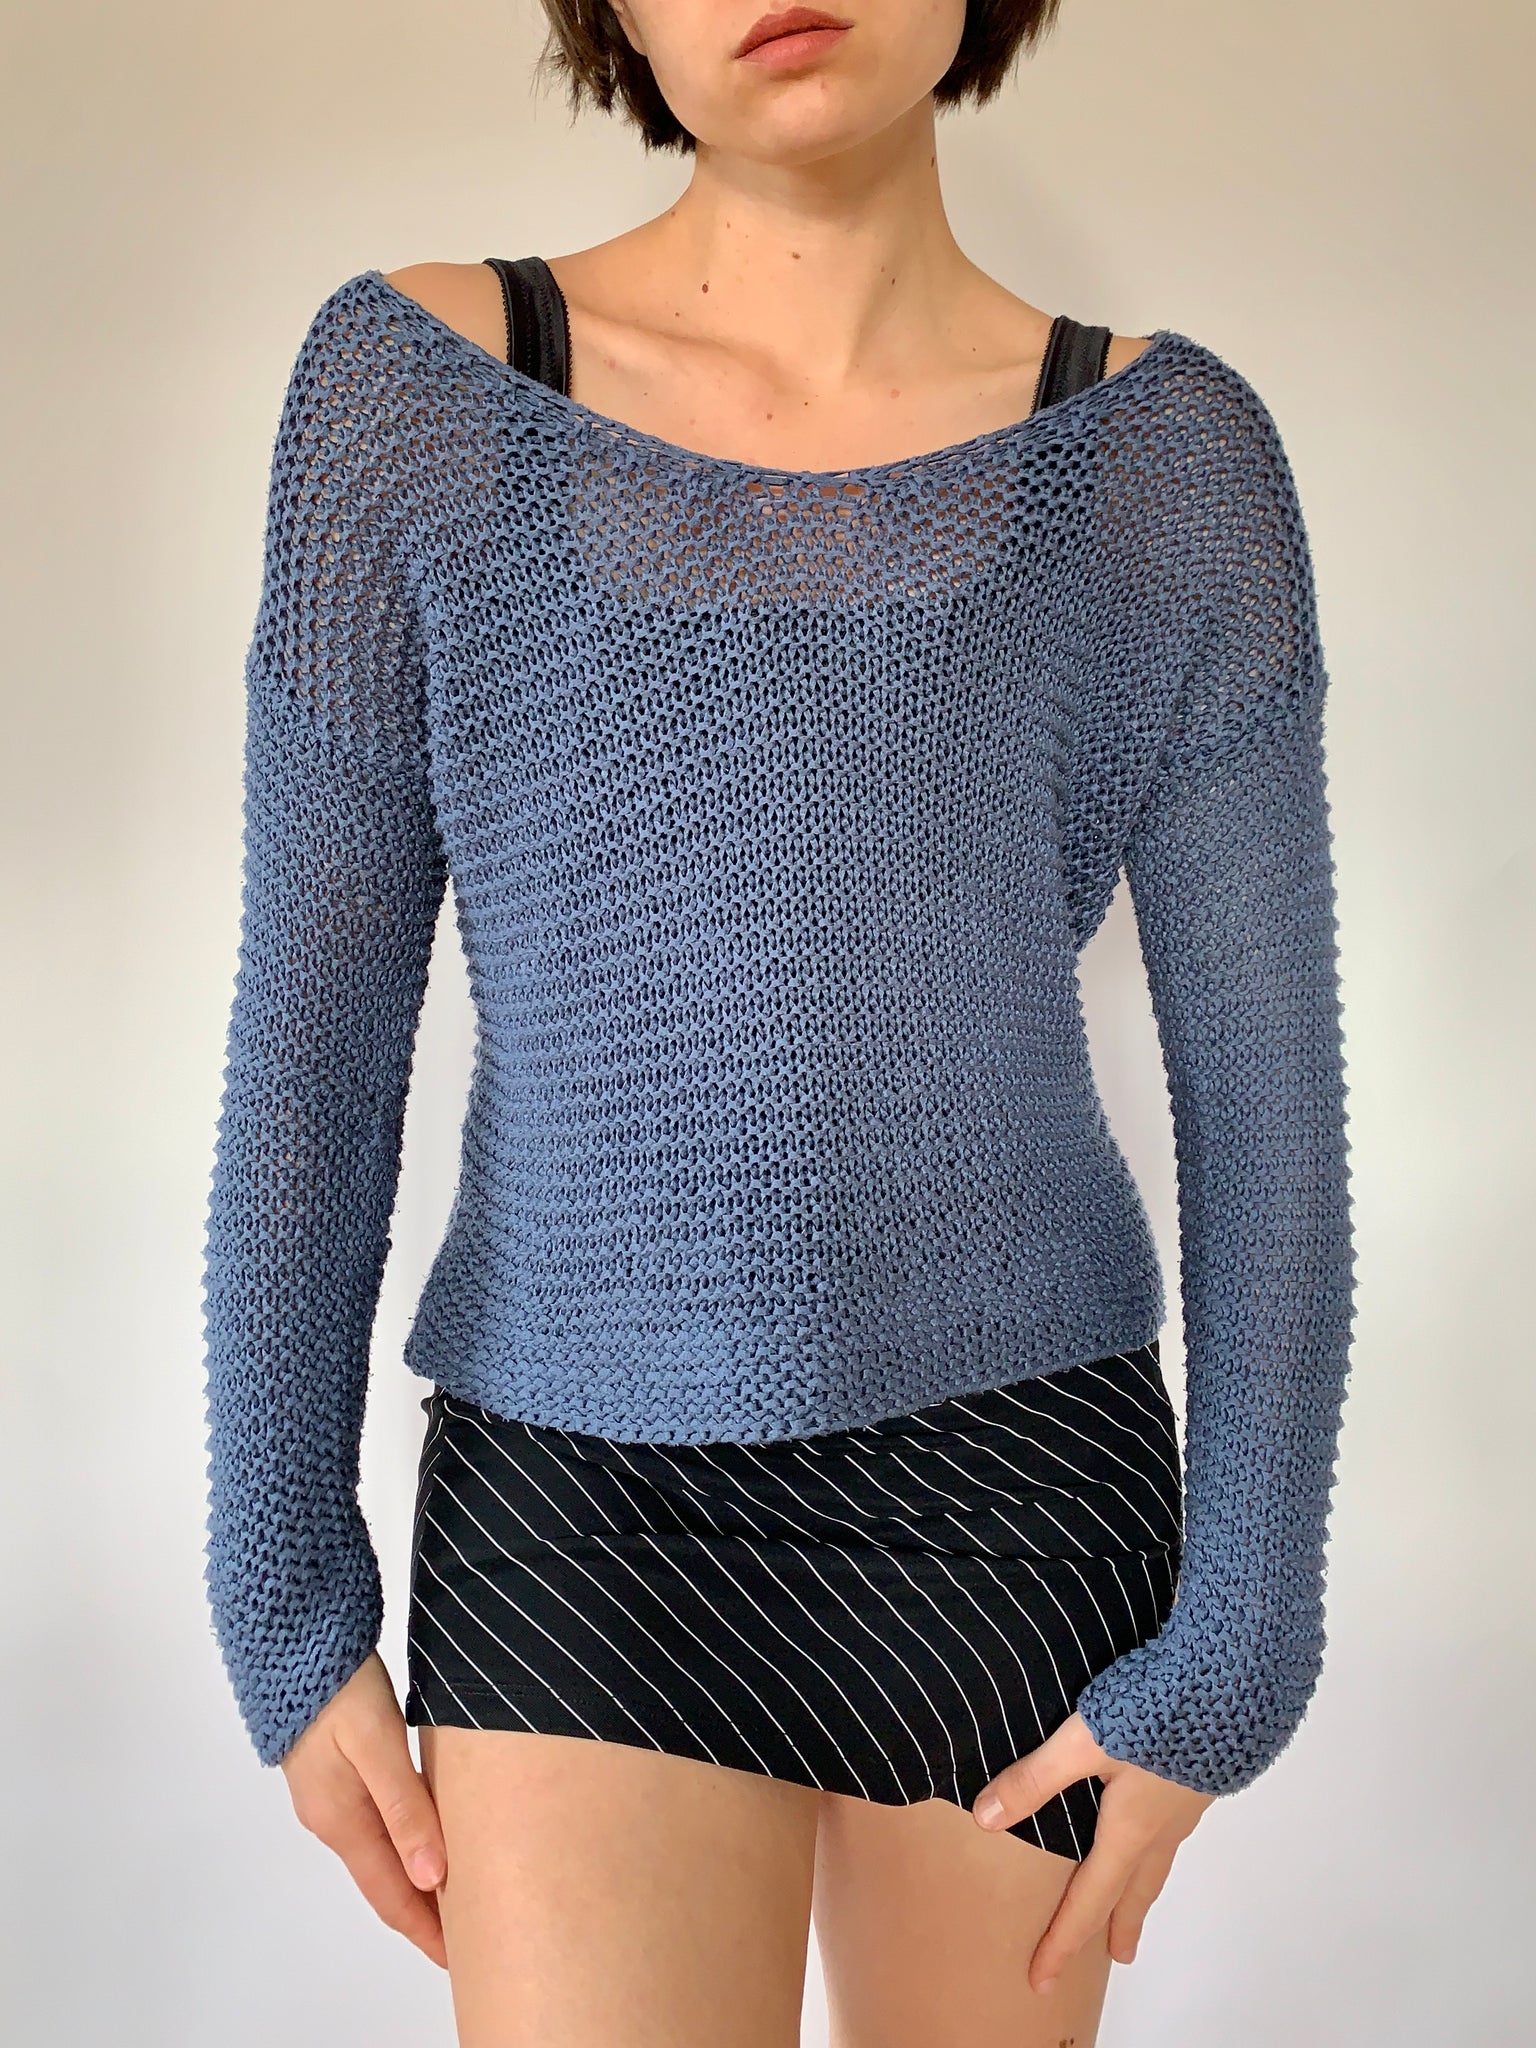 Crochet Sweater - Small